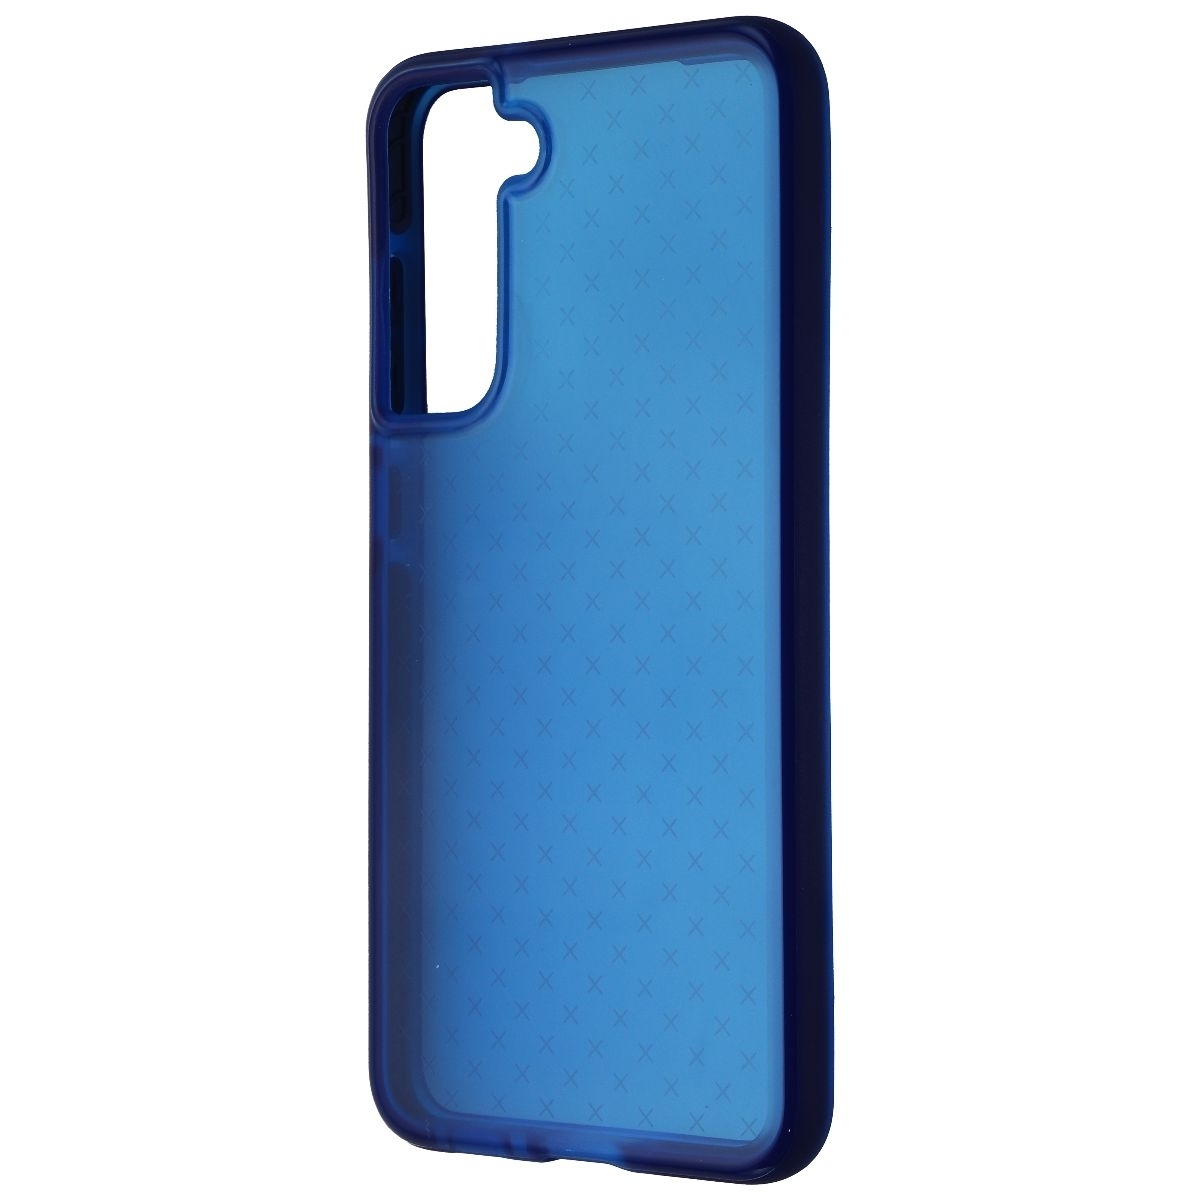 Tech21 Evo Check Series Case For Samsung Galaxy S21 FE 5G - Blue (Refurbished)